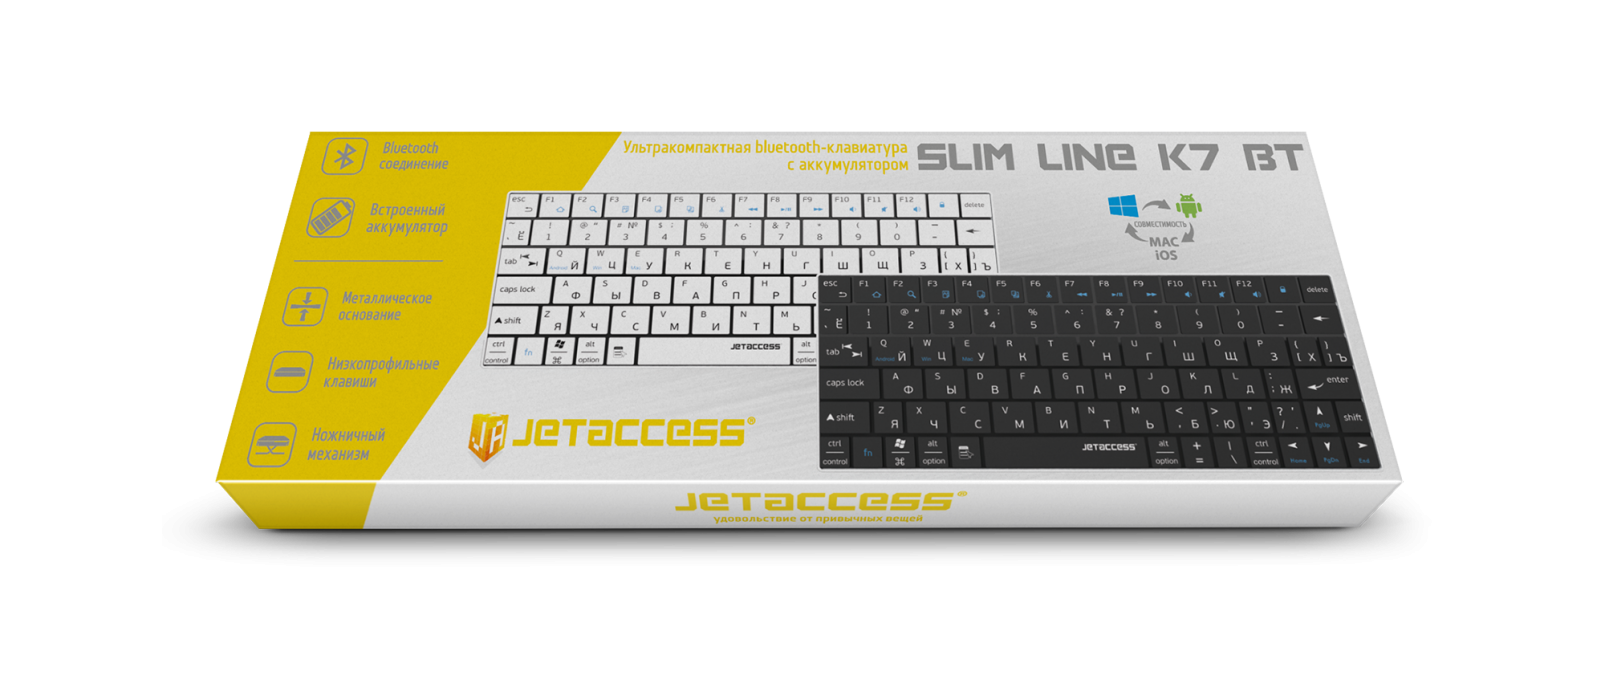 Ультракомпактная bluetooth-клавиатура с аккумулятором SLIM LINE K7 BT4